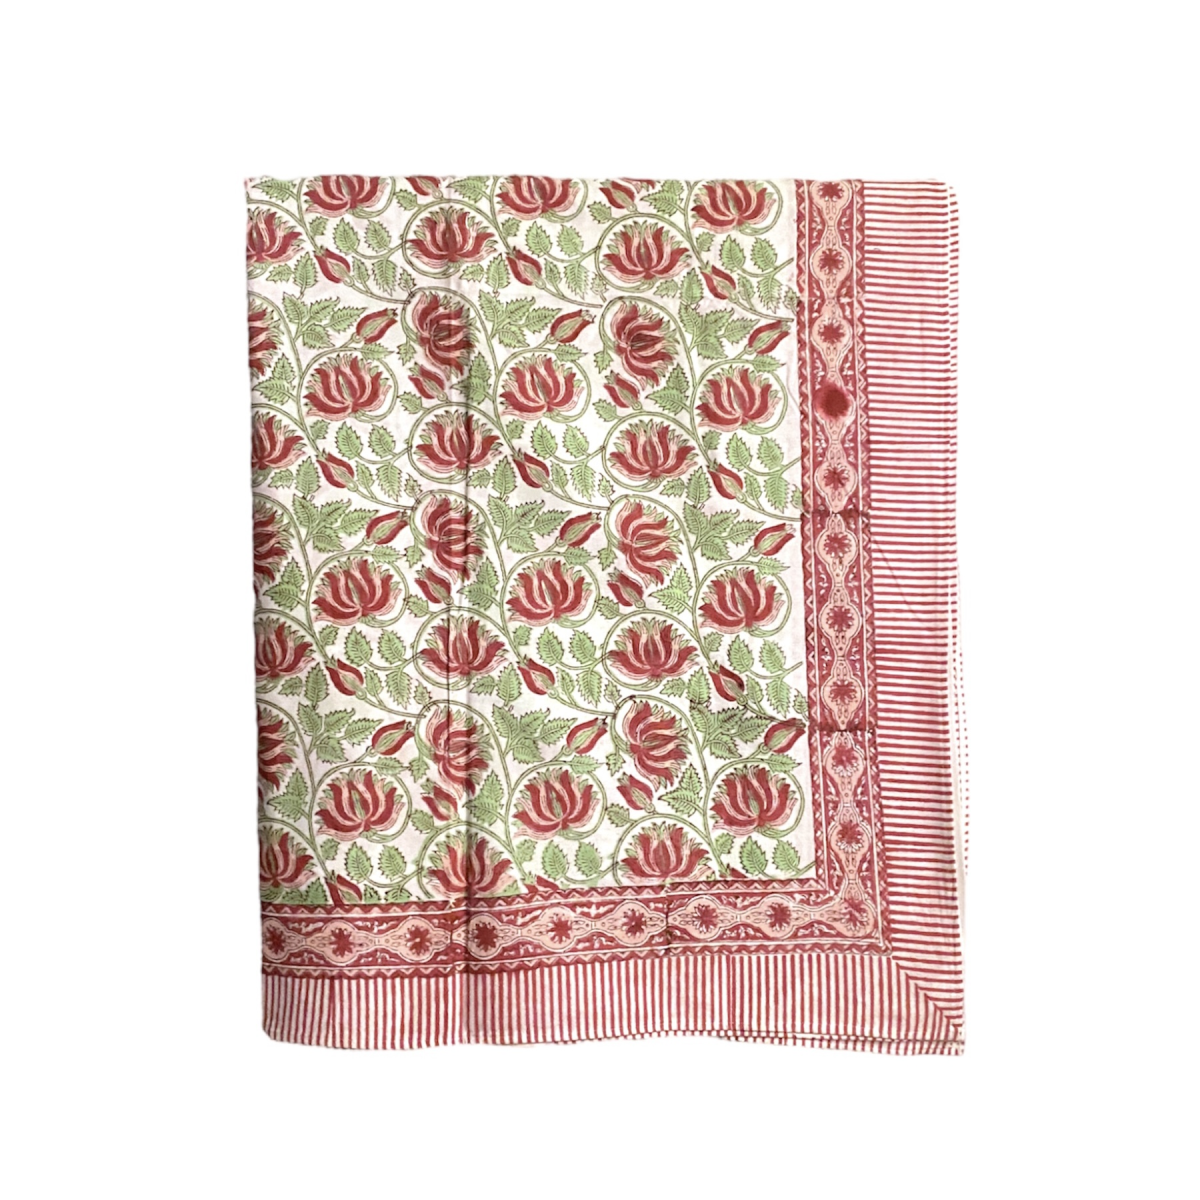 Block Printed Cotton Table Linen (270cm x 180cm) -  Claret Red 